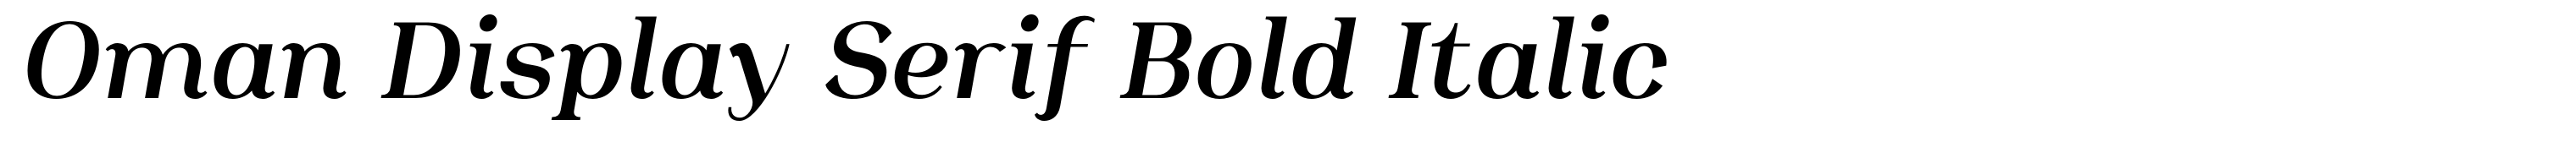 Oman Display Serif Bold Italic